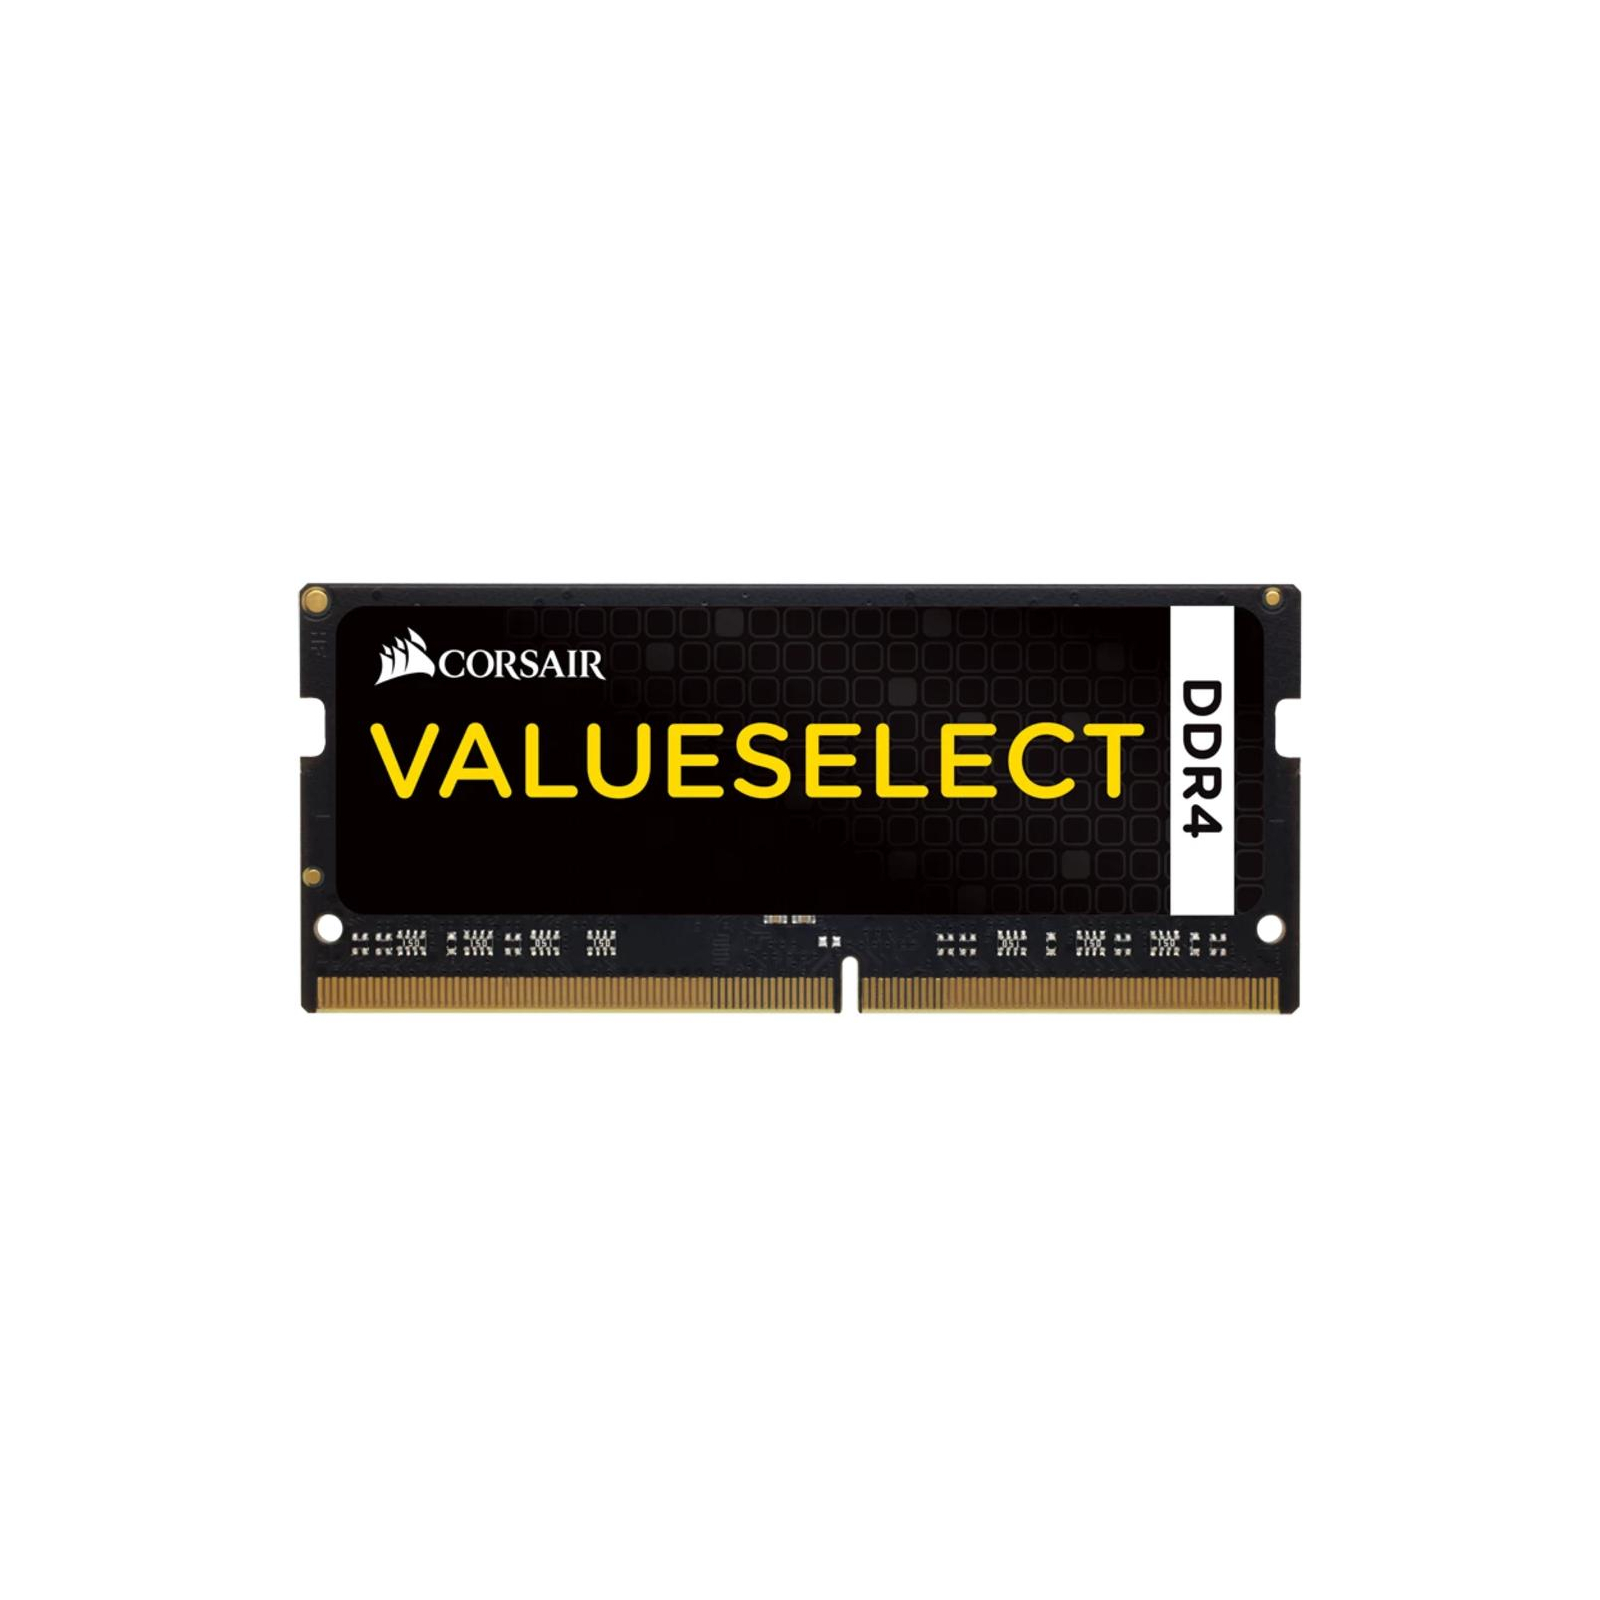 Модуль памяти для ноутбука SoDIMM DDR4 8GB 2133 MHz Value Select Corsair (CMSO8GX4M1A2133C15)